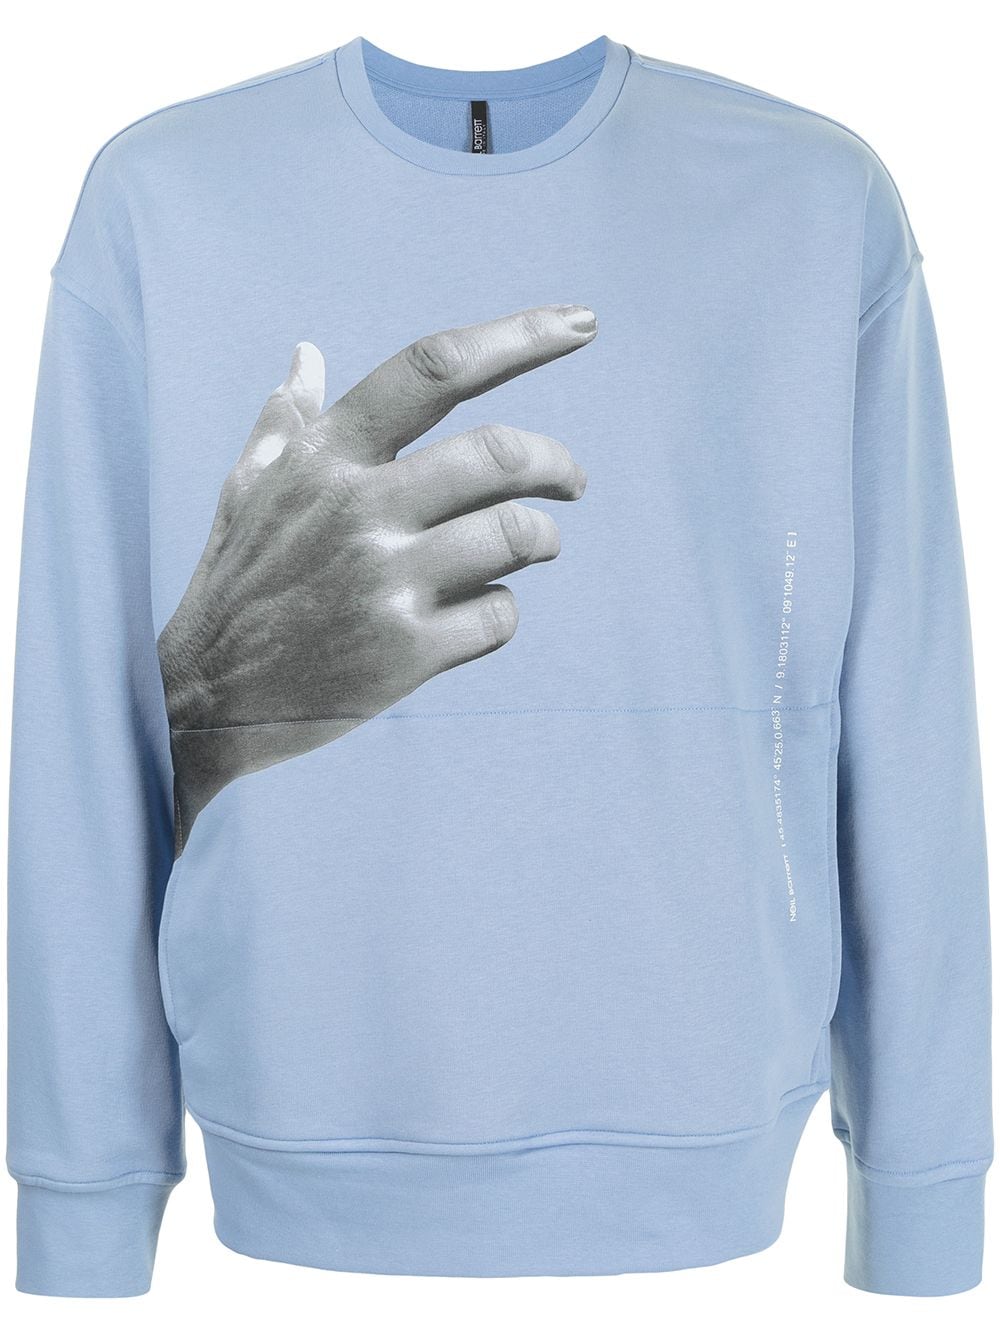 'The Other Hand Series' sweatshirt